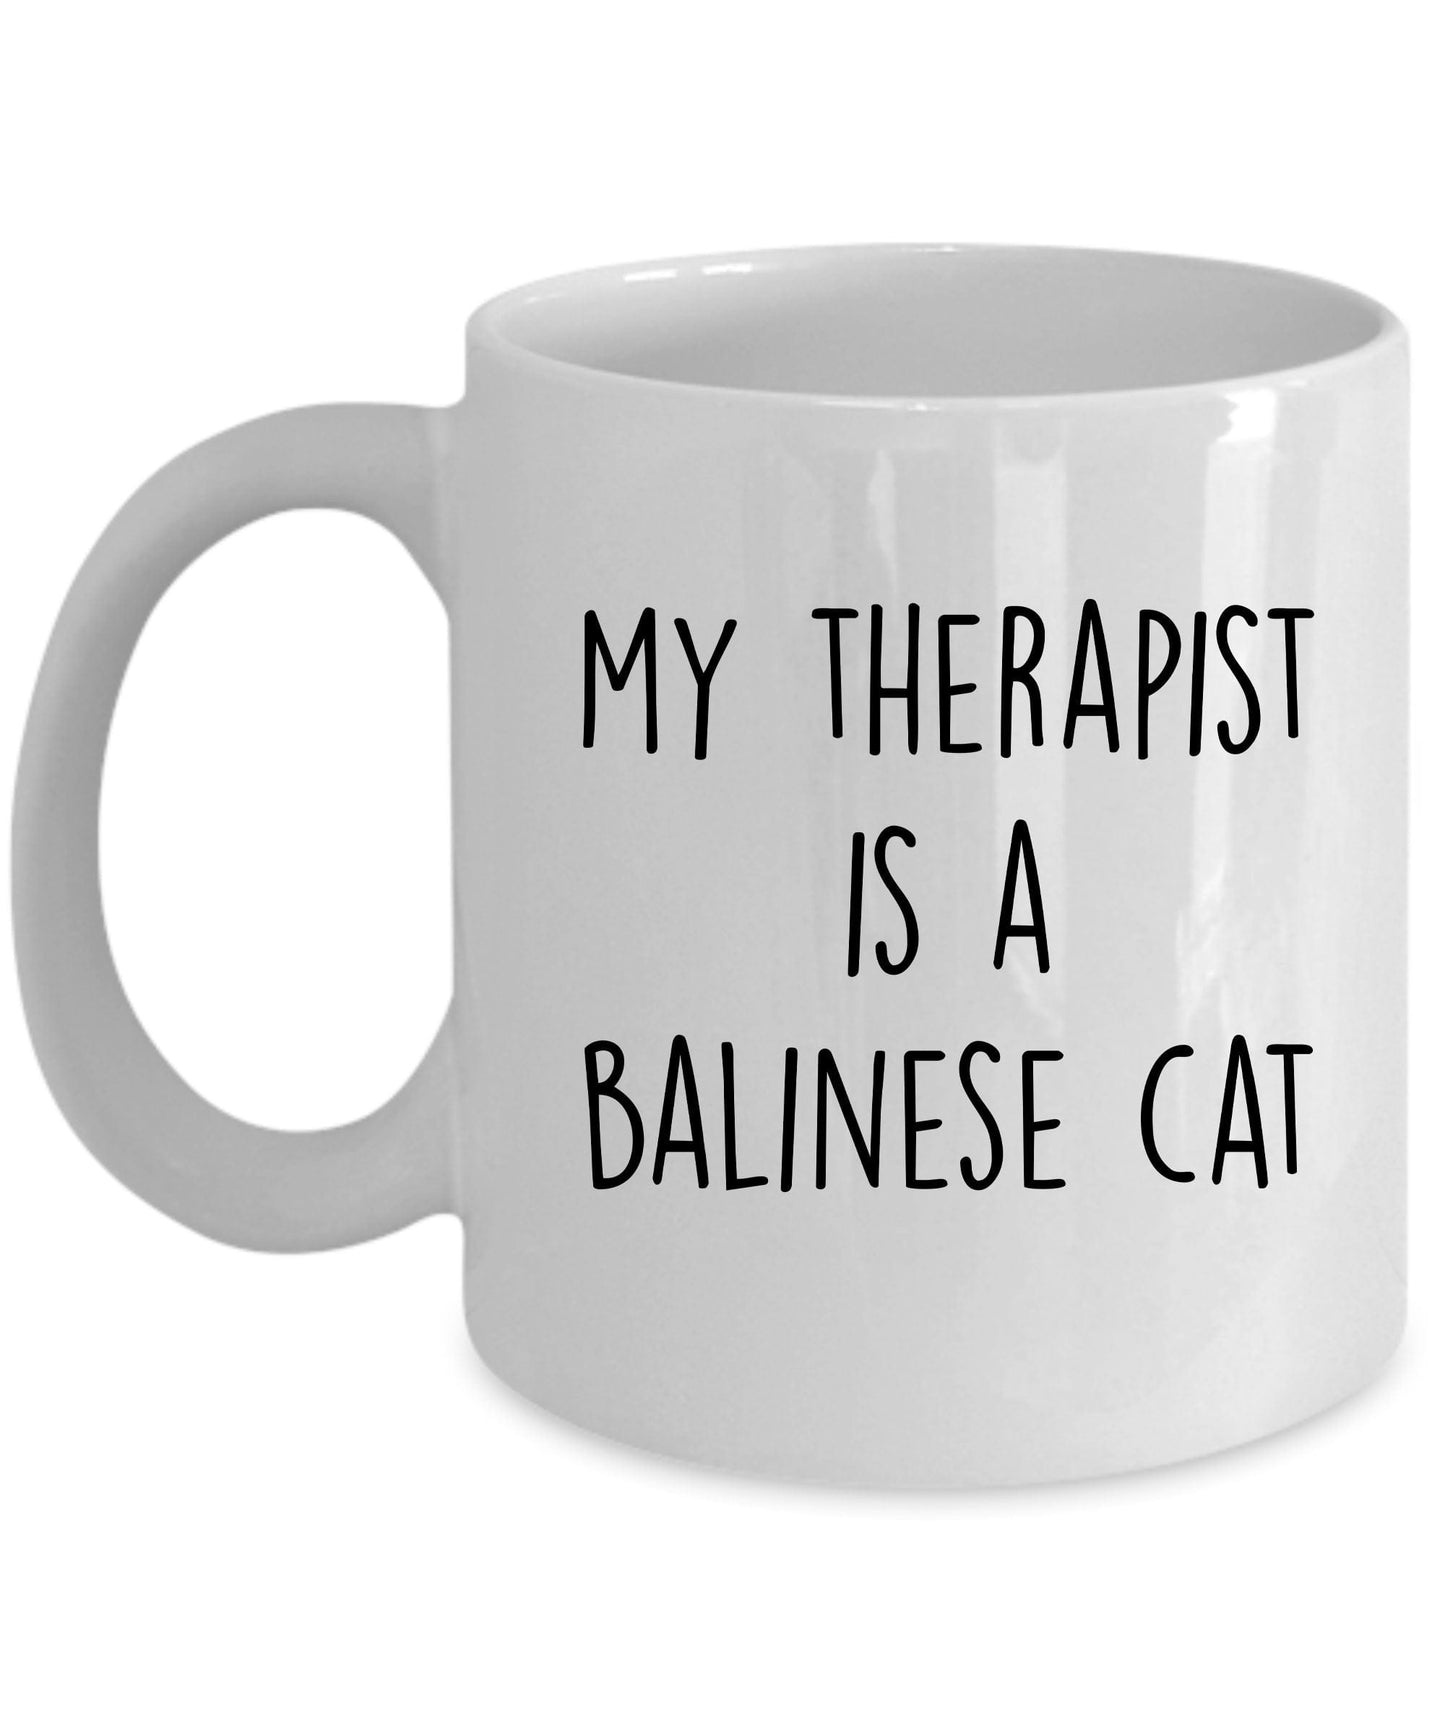 Balinese Cat Coffee Mug - My Therapist is a Balinese Cat